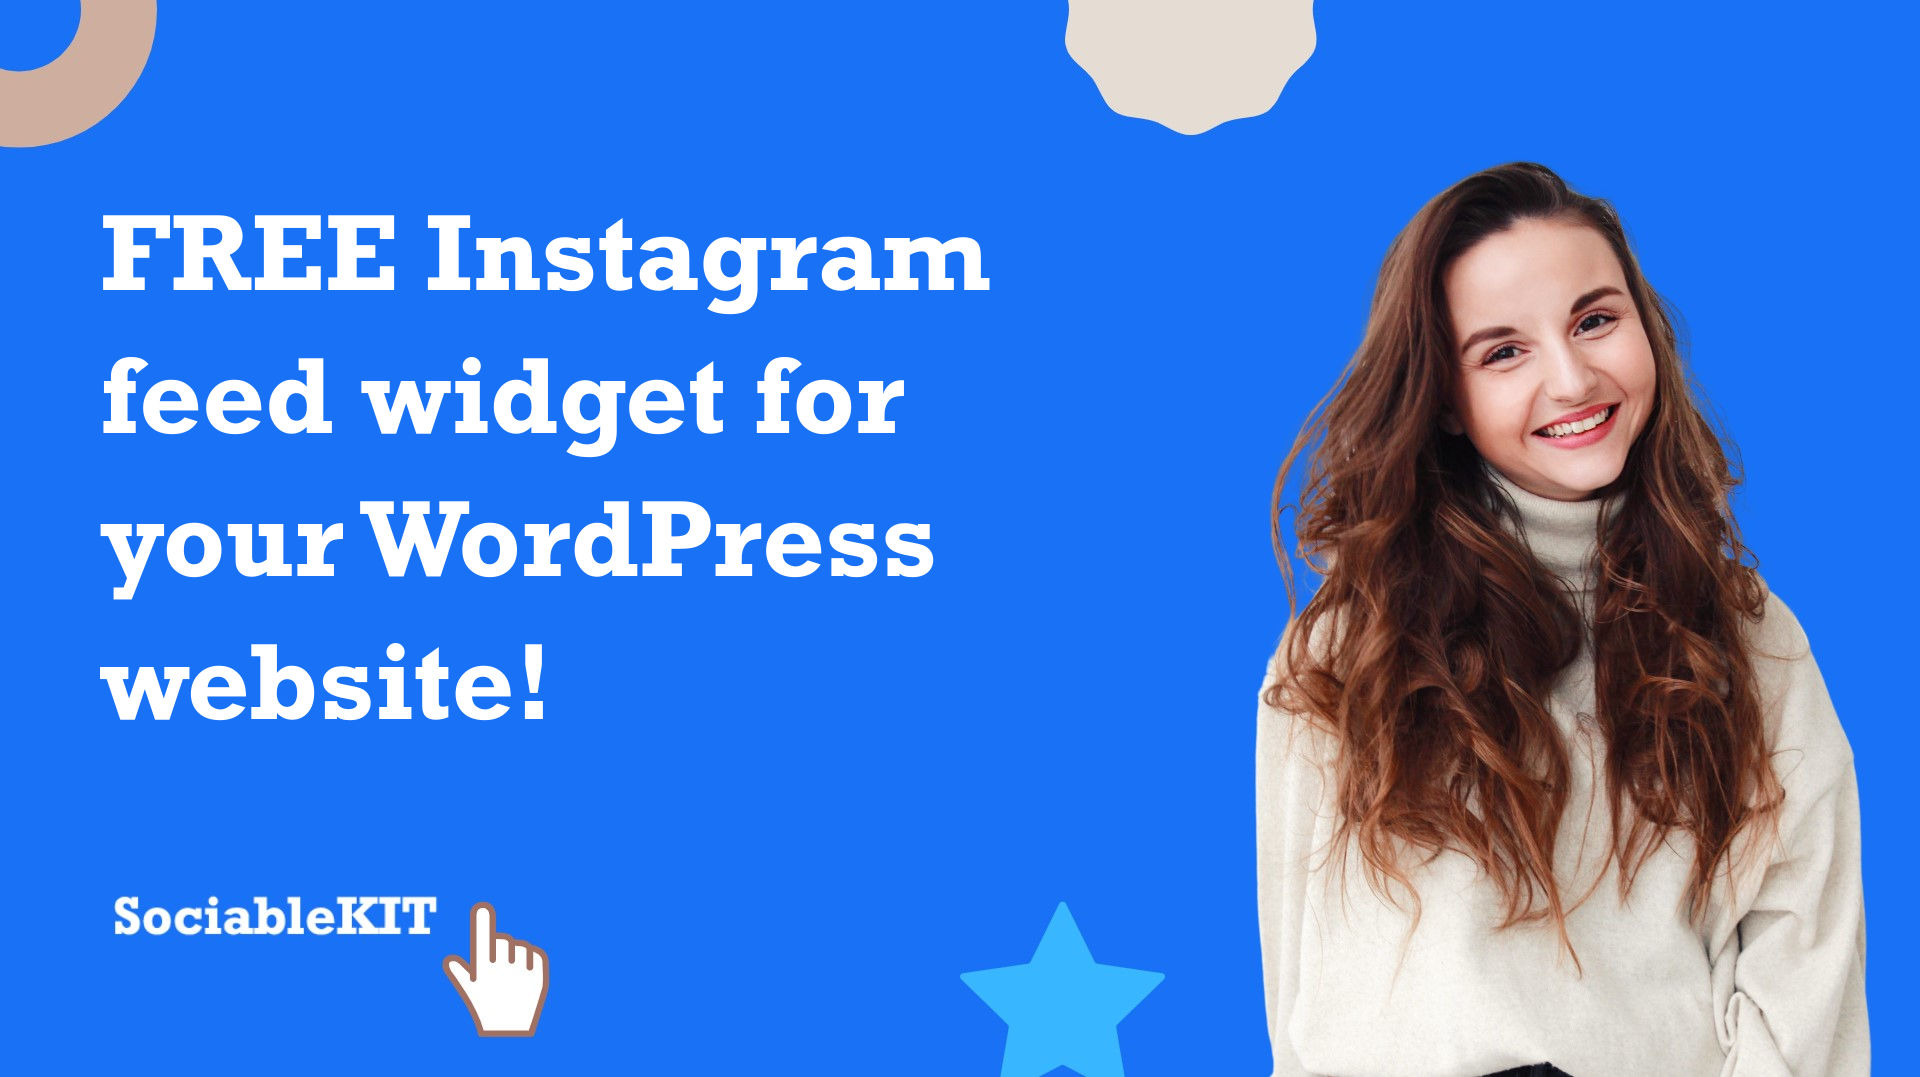 Free Instagram feed widget for your WordPress website